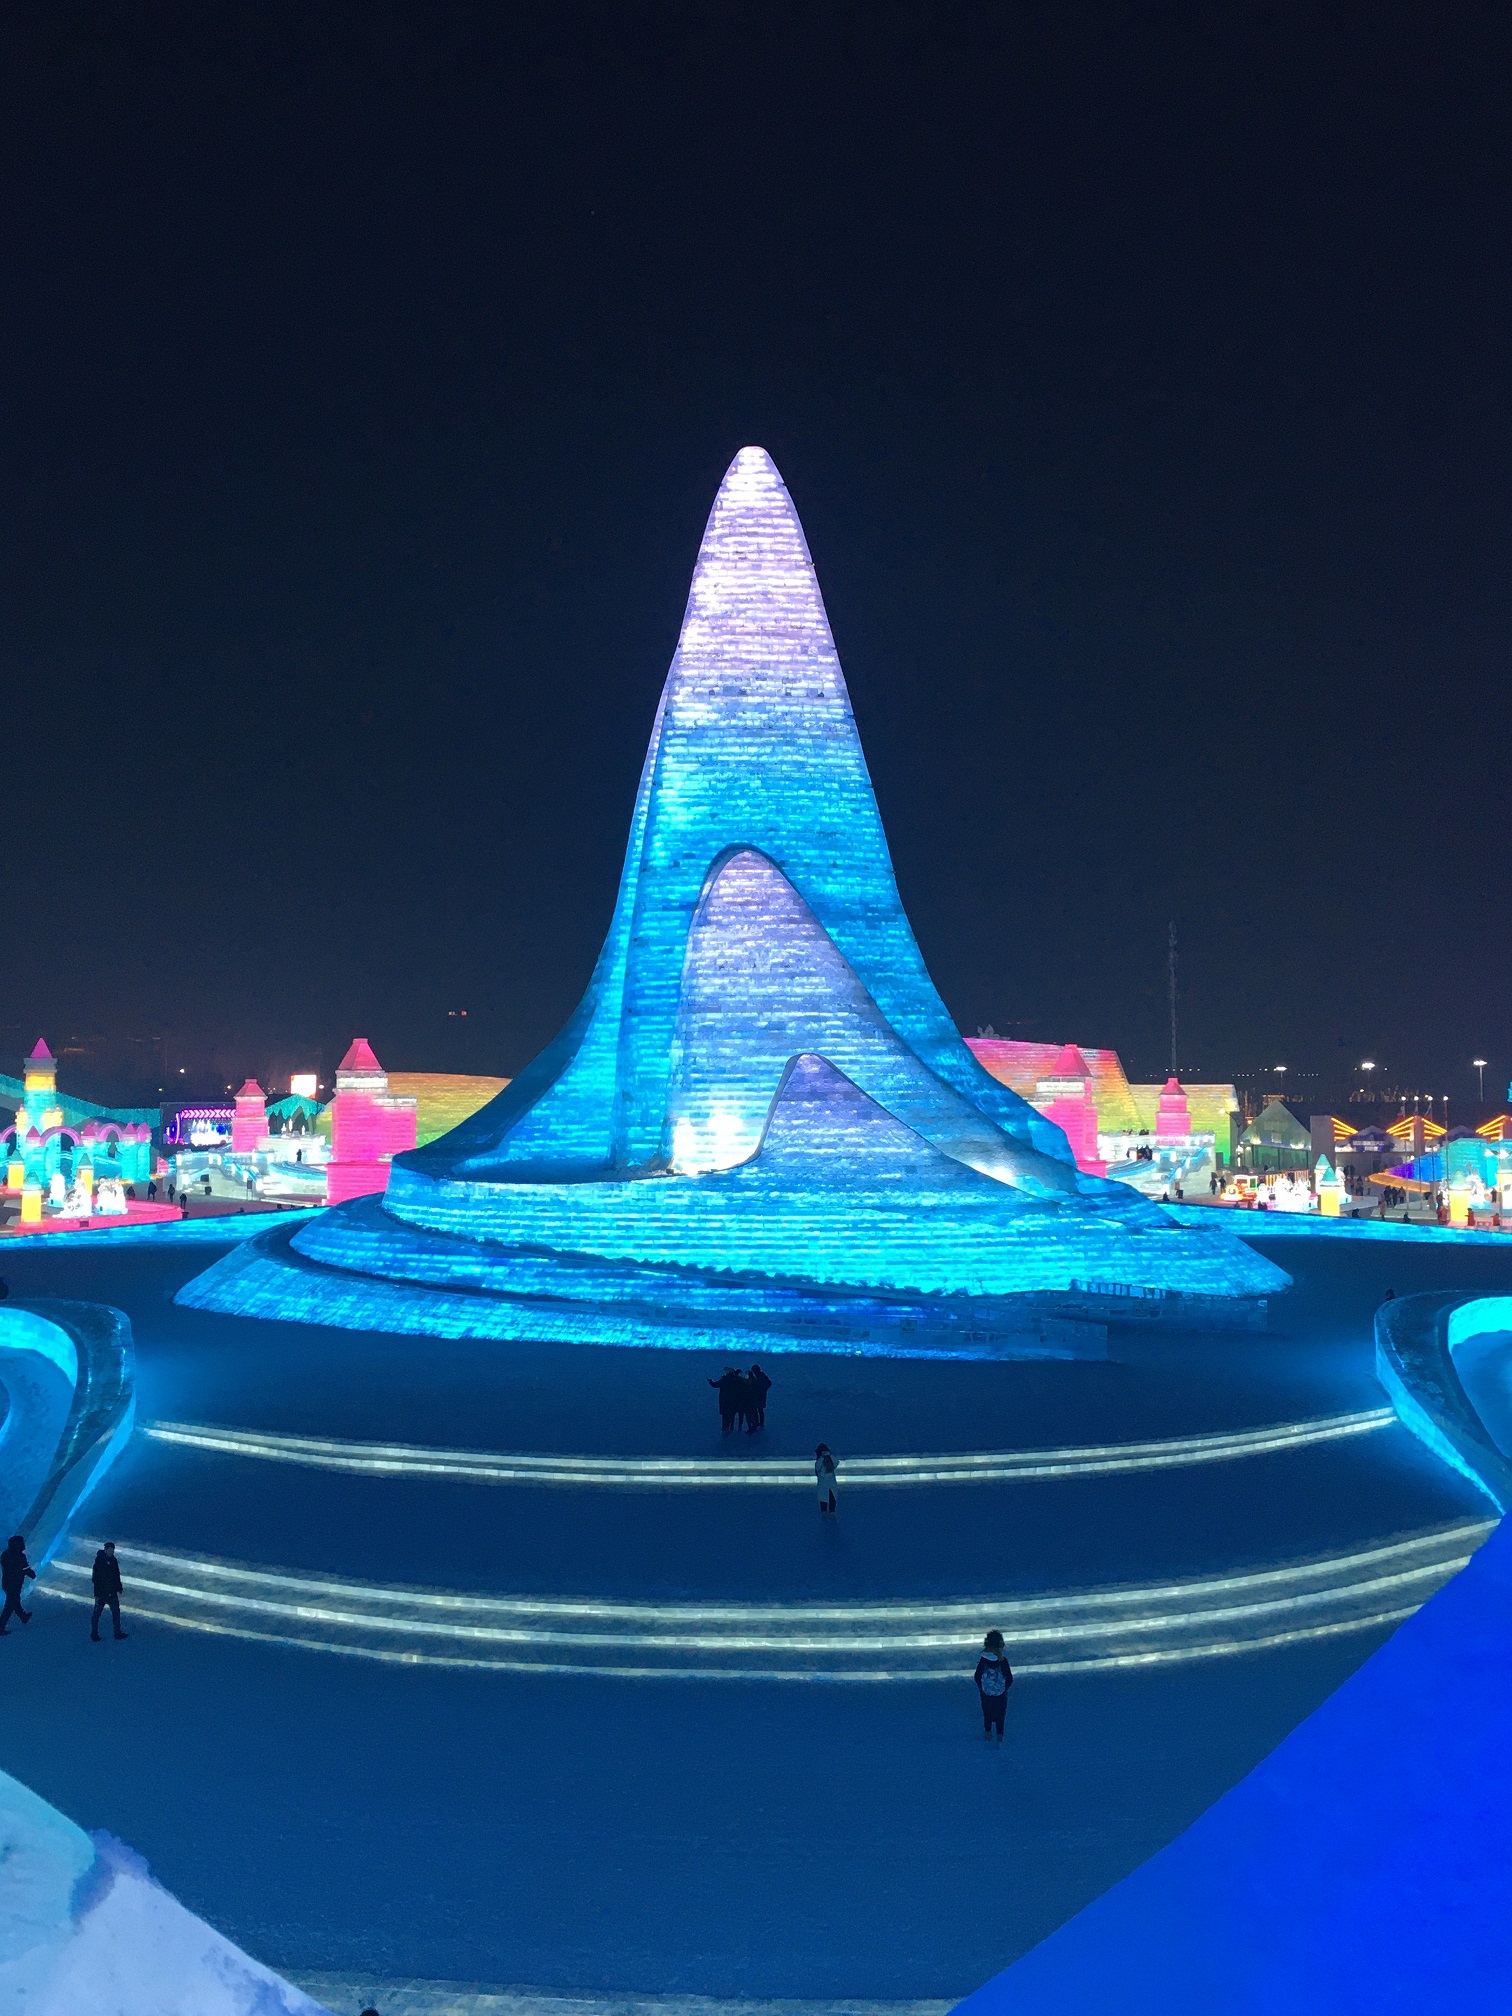 The Harbin Snow and Ice Festival